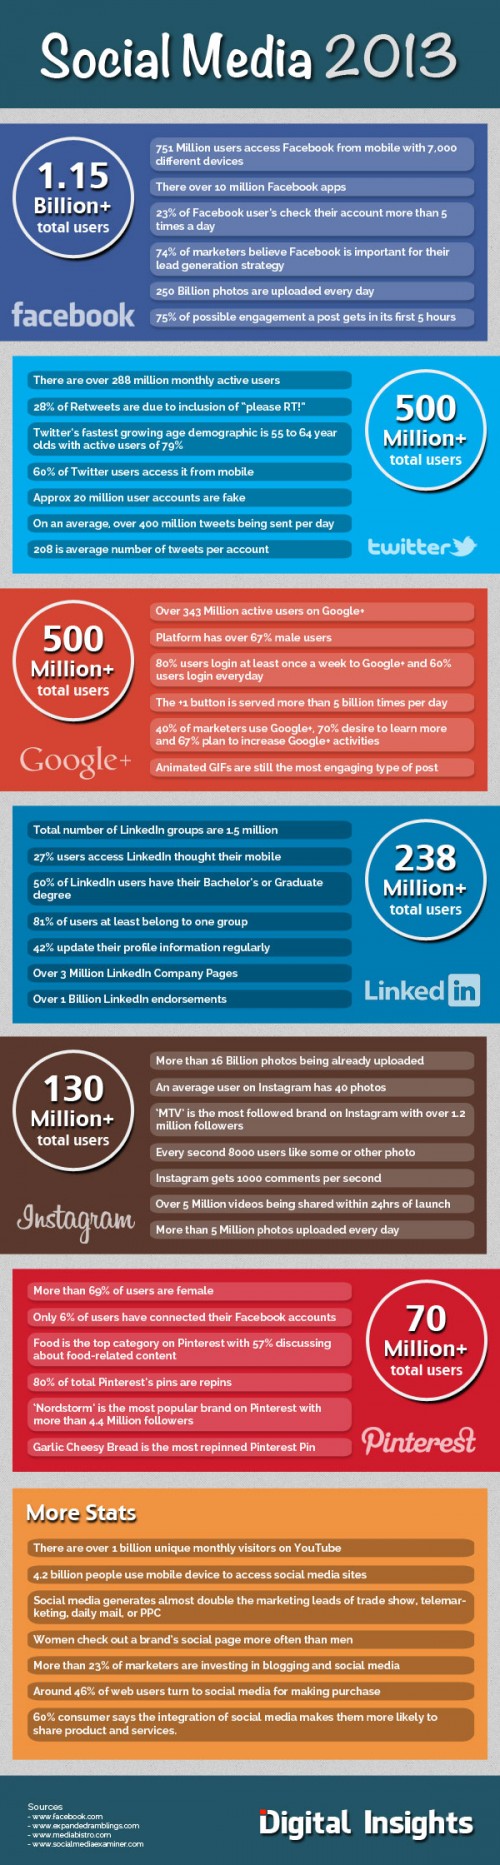 45 Amazing Social Media Facts & Figures (Infographic) - viralblog.com